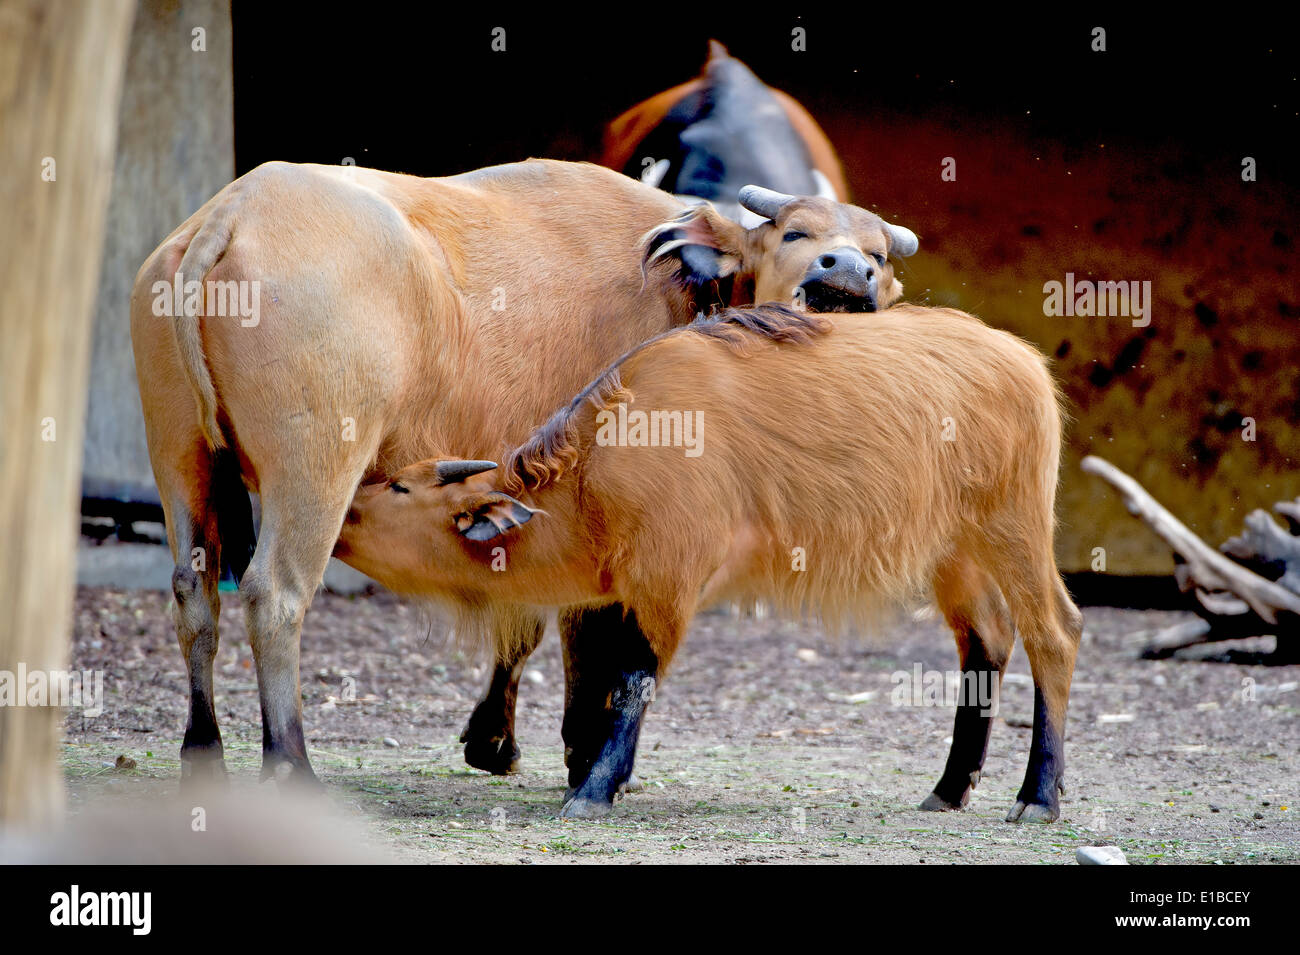 Syncerus caffer nanus, African forest buffalo, rotbueffel, African buffalo, Afrikanischer bueffel, zoo Stock Photo